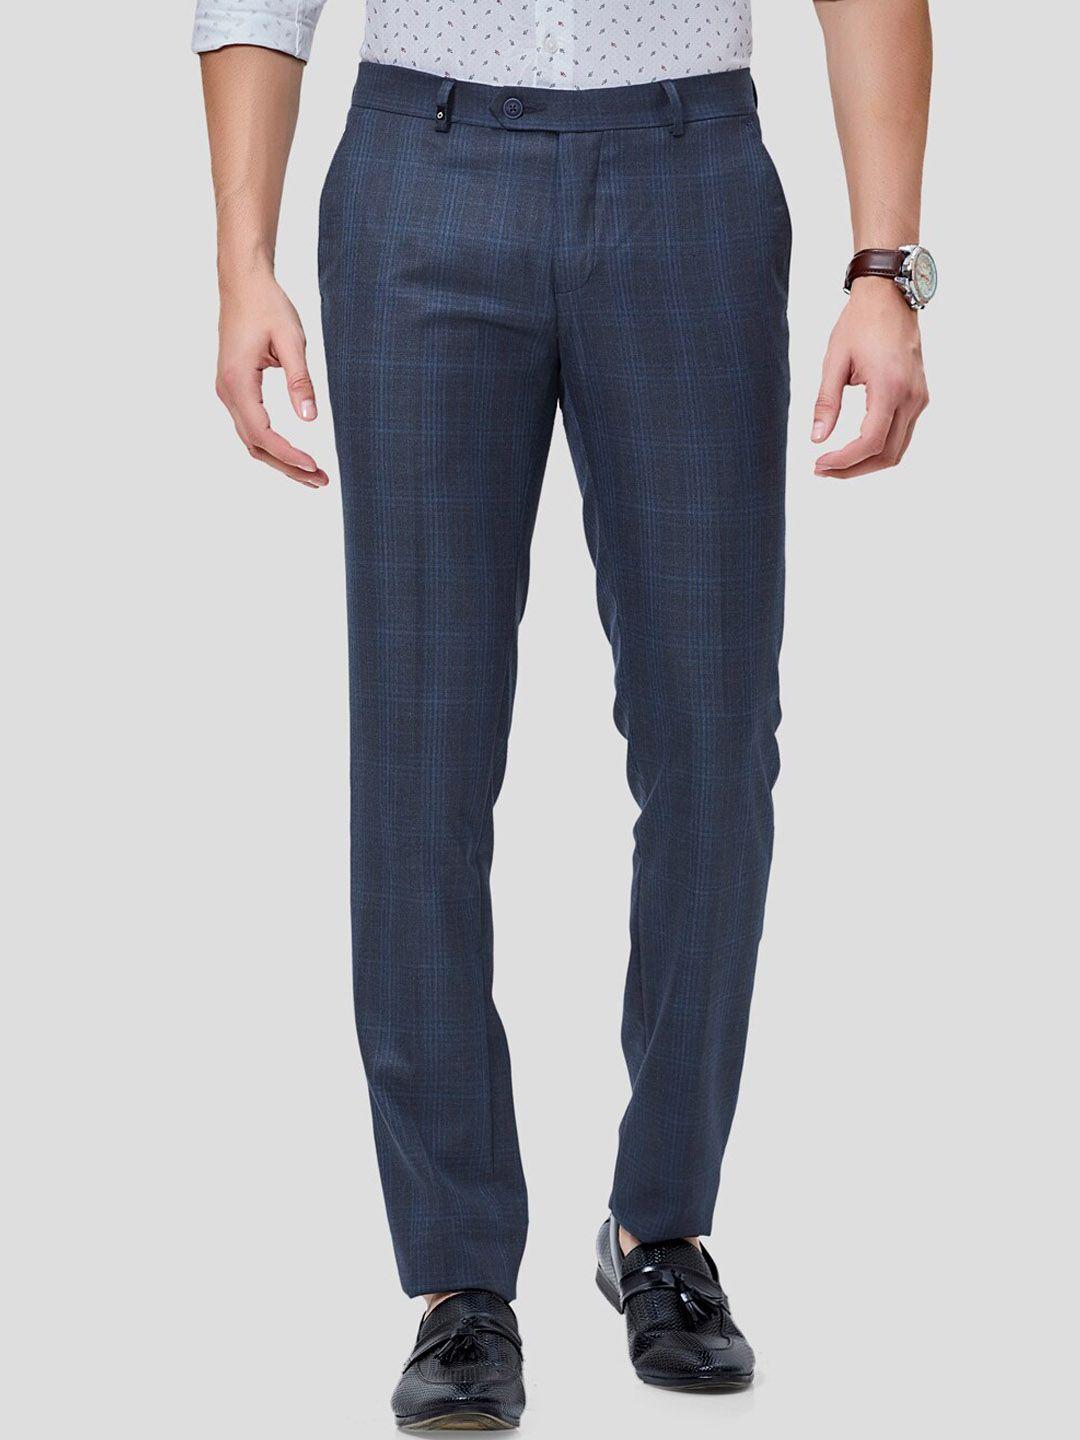 oxemberg-men-navy-blue-checked-slim-fit-formal-trouser